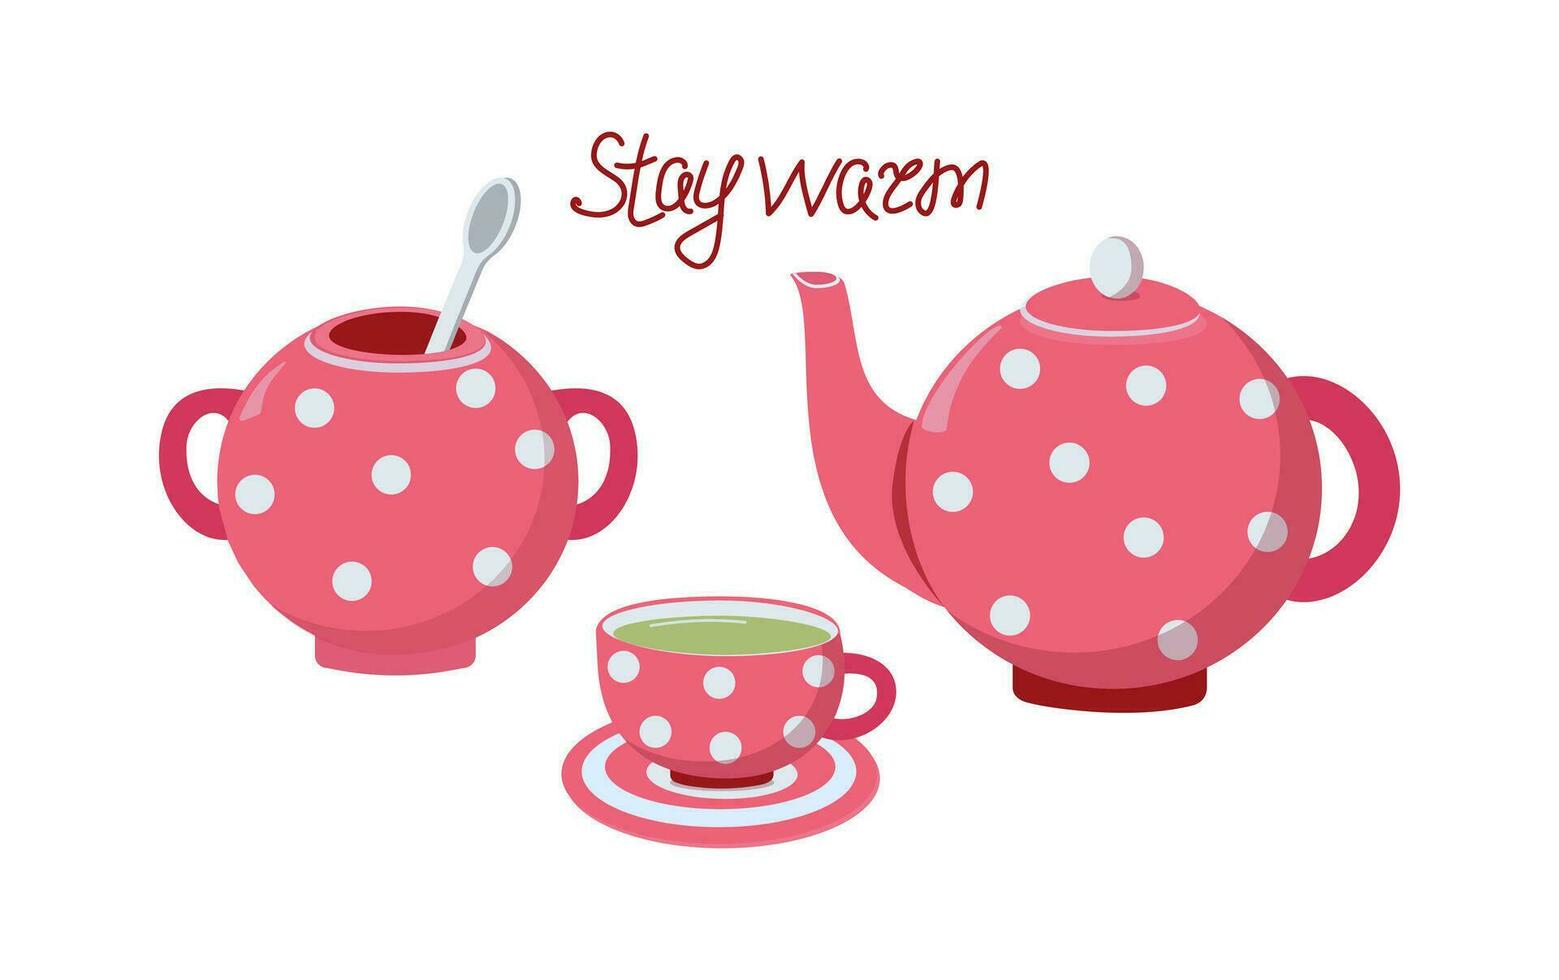 pava, té, azúcar bol. conjunto de platos para té Bebiendo. té en un taza. caliente beber. vector